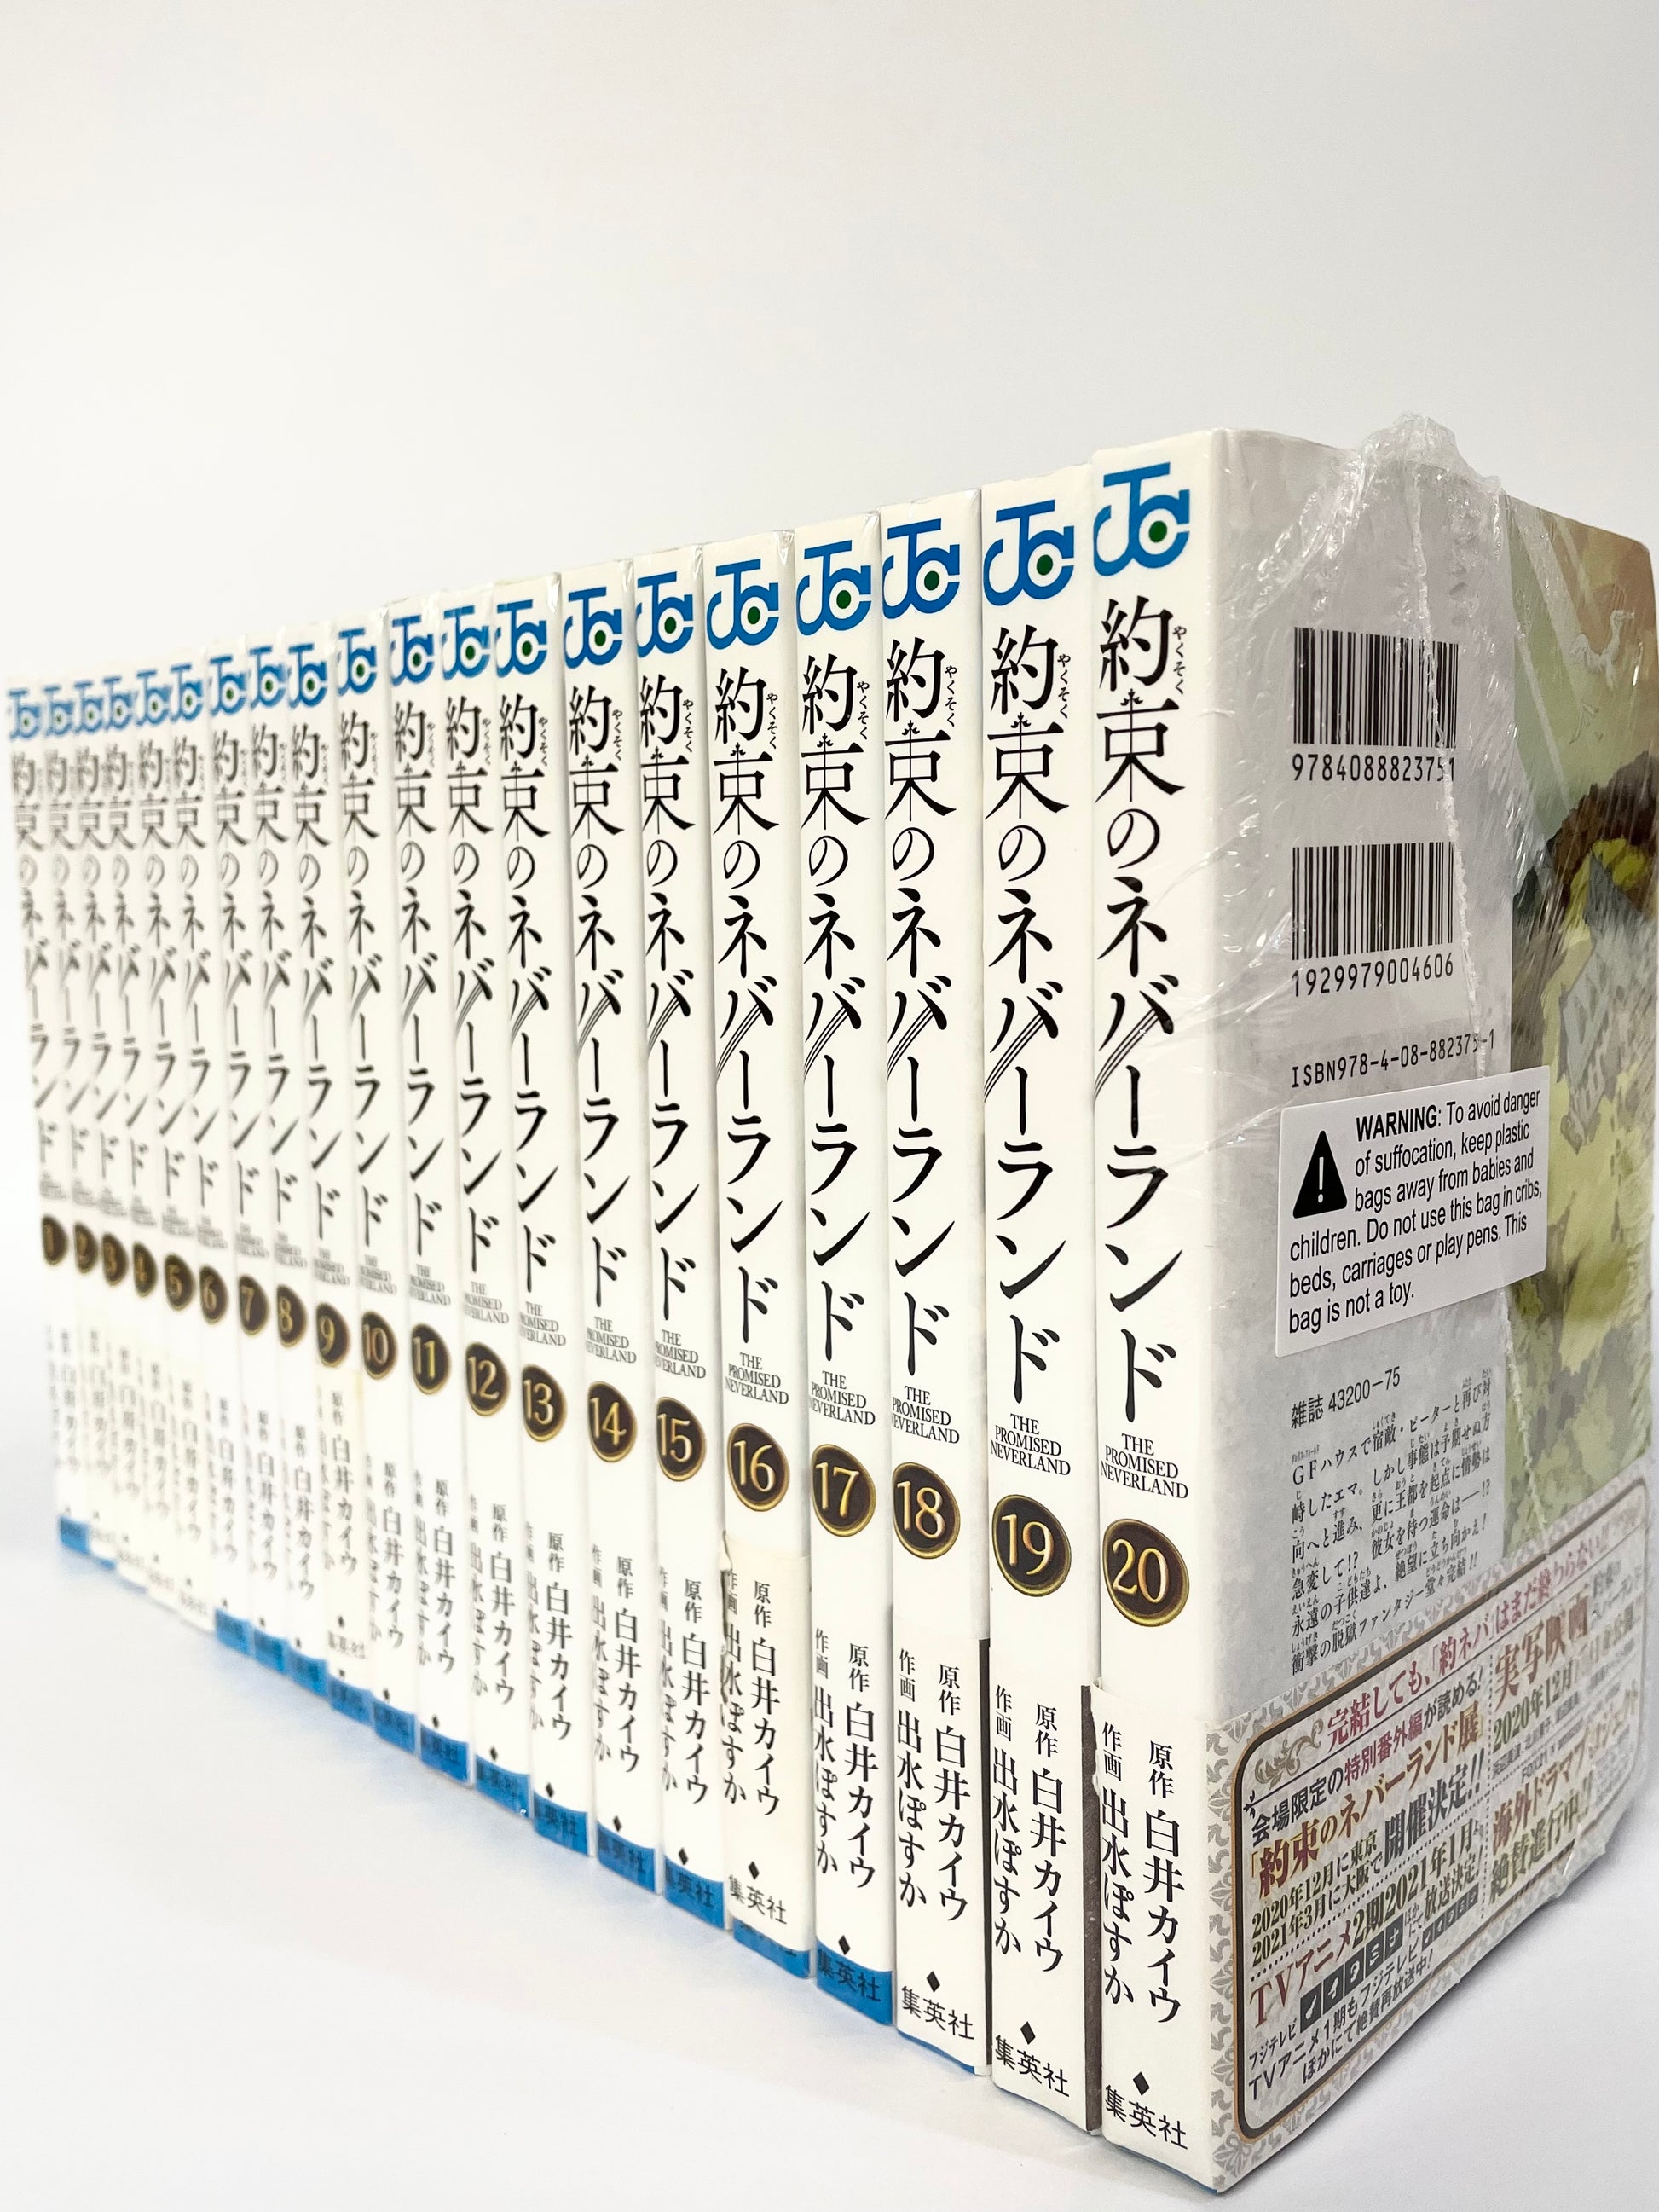 The Promised Neverland Manga 16-20 Set by Kaiu Shirai